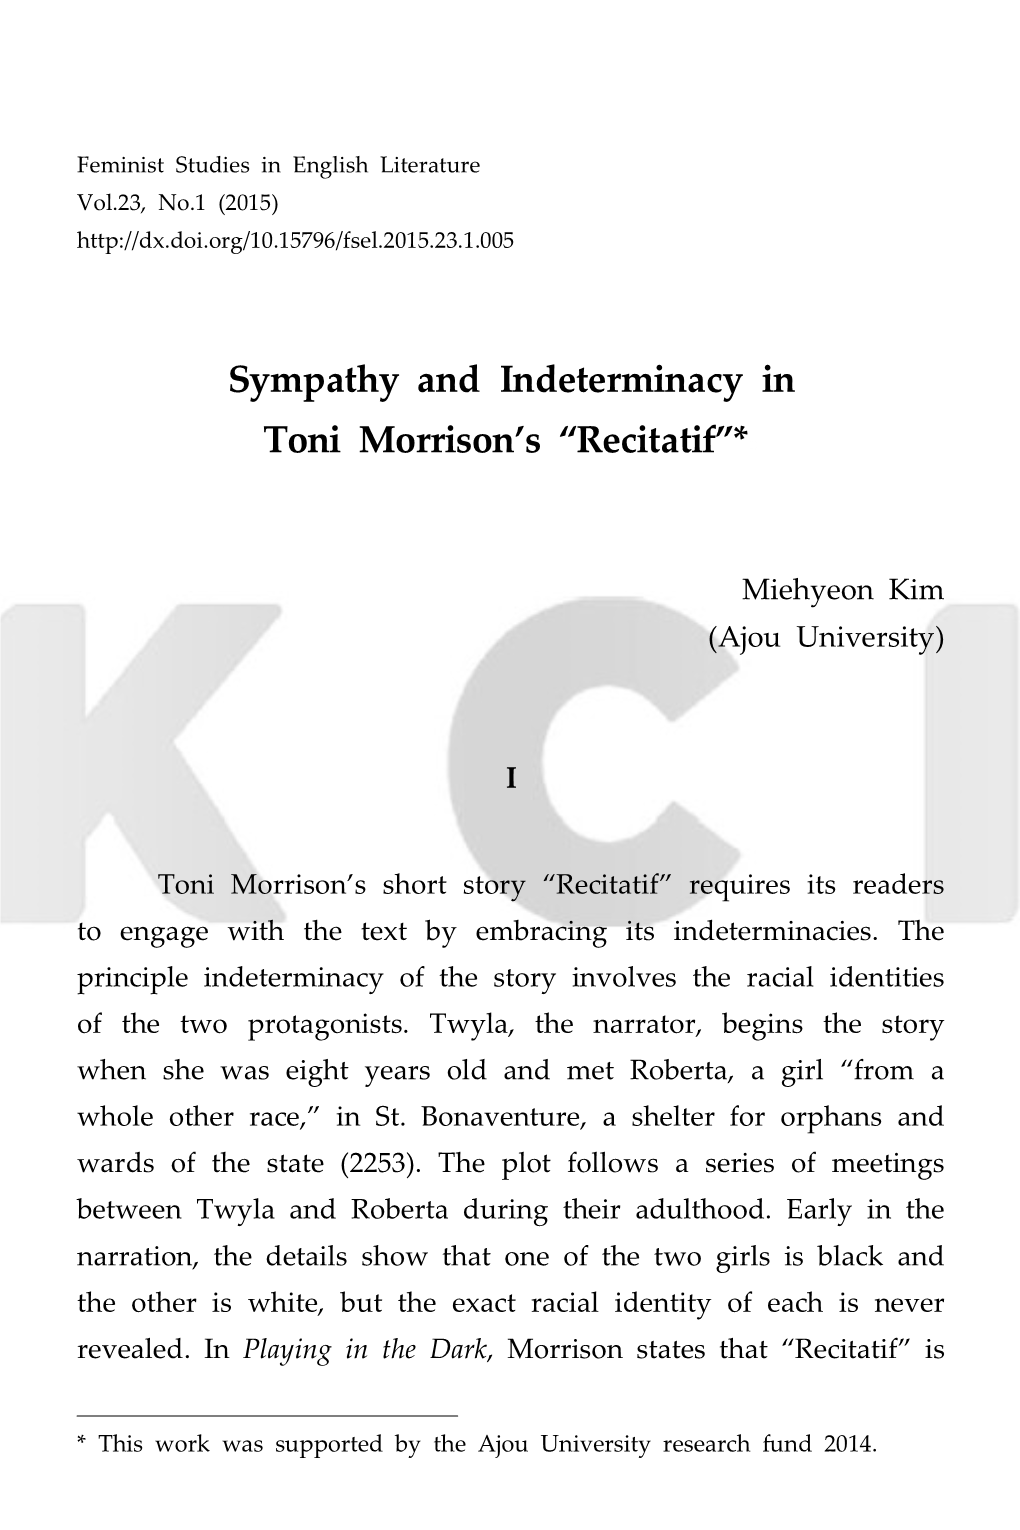 Sympathy and Indeterminacy in Toni Morrison's “Recitatif”*